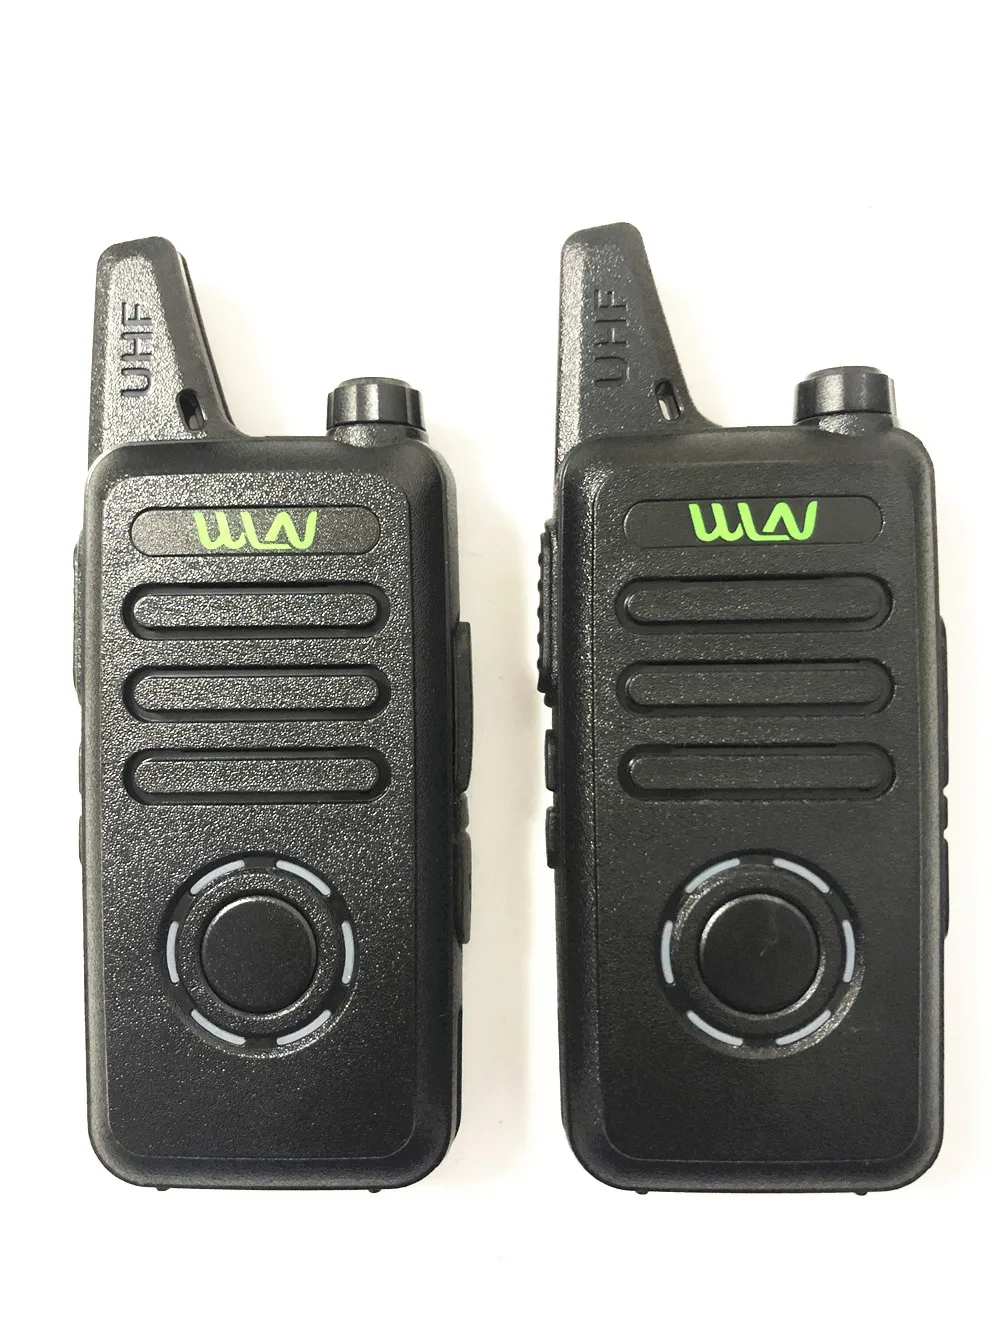 2PCS WLN KD-C1 plus Mini Walkie Talkie UHF 400-470MHz Slim Packet Size Two Way Radio